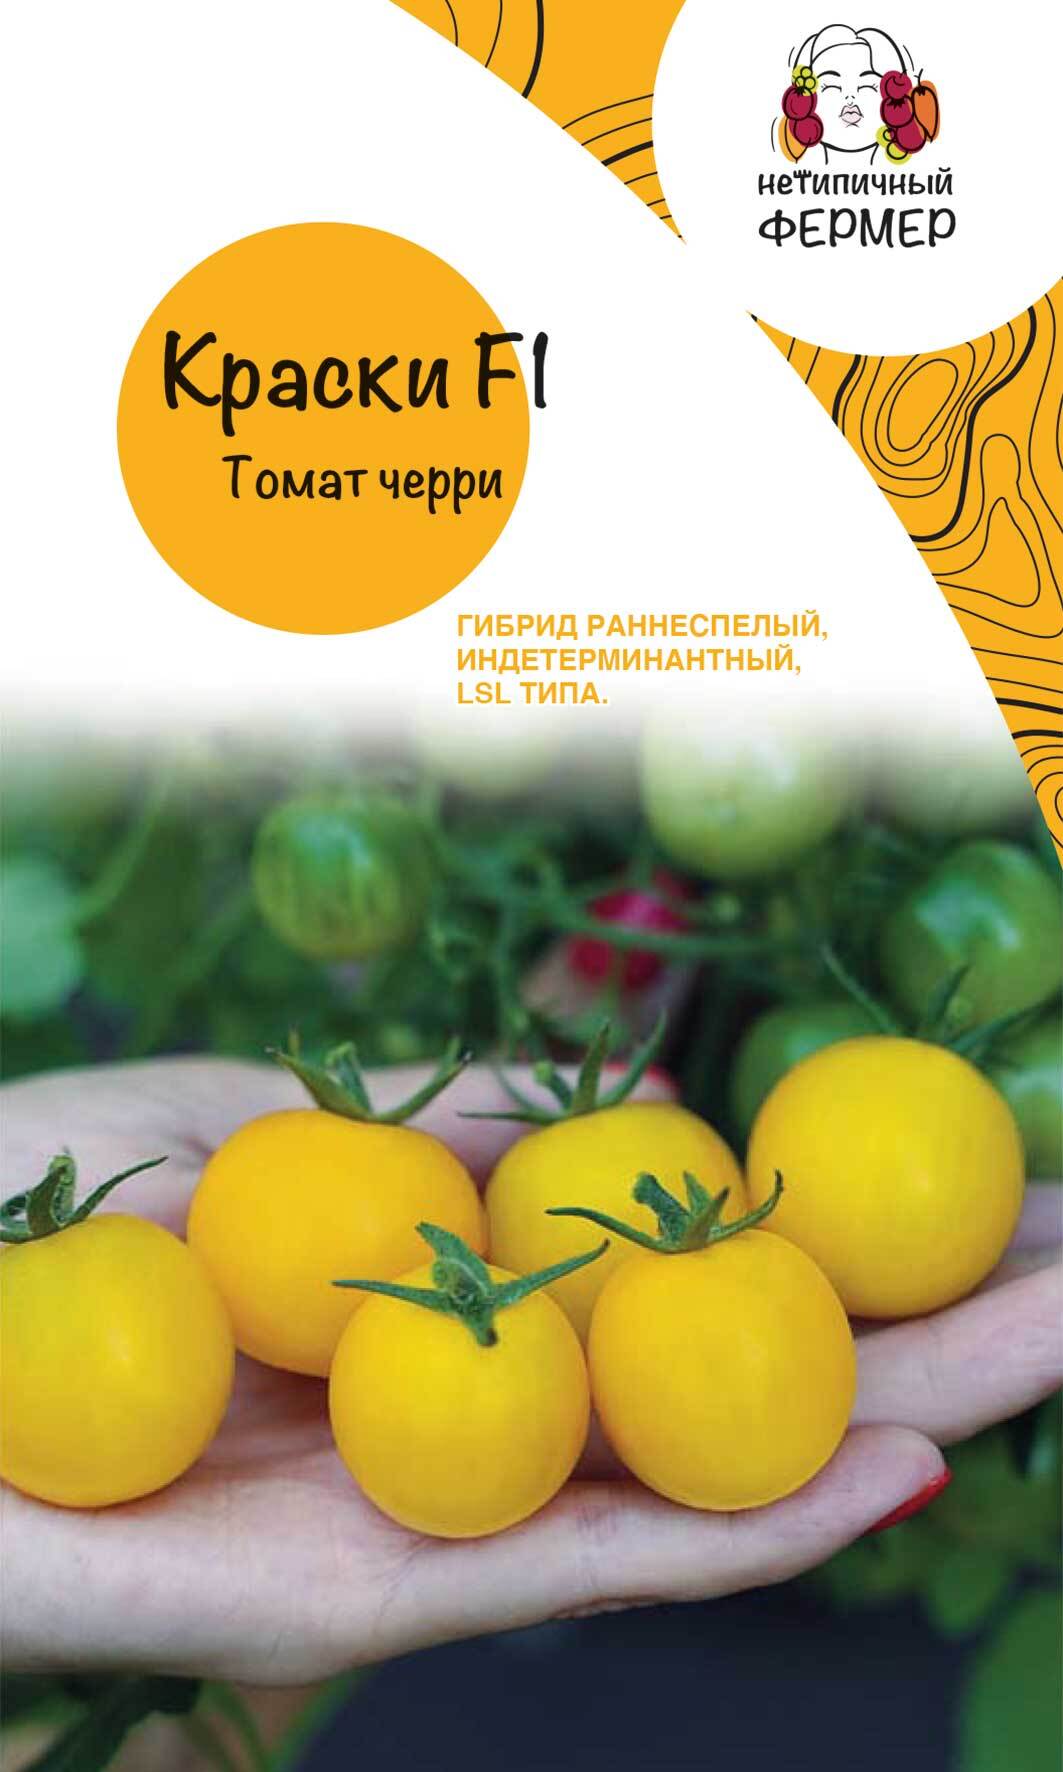 Семена томат Краски F1 Нетипичный Фермер 00-00002050 1 уп.